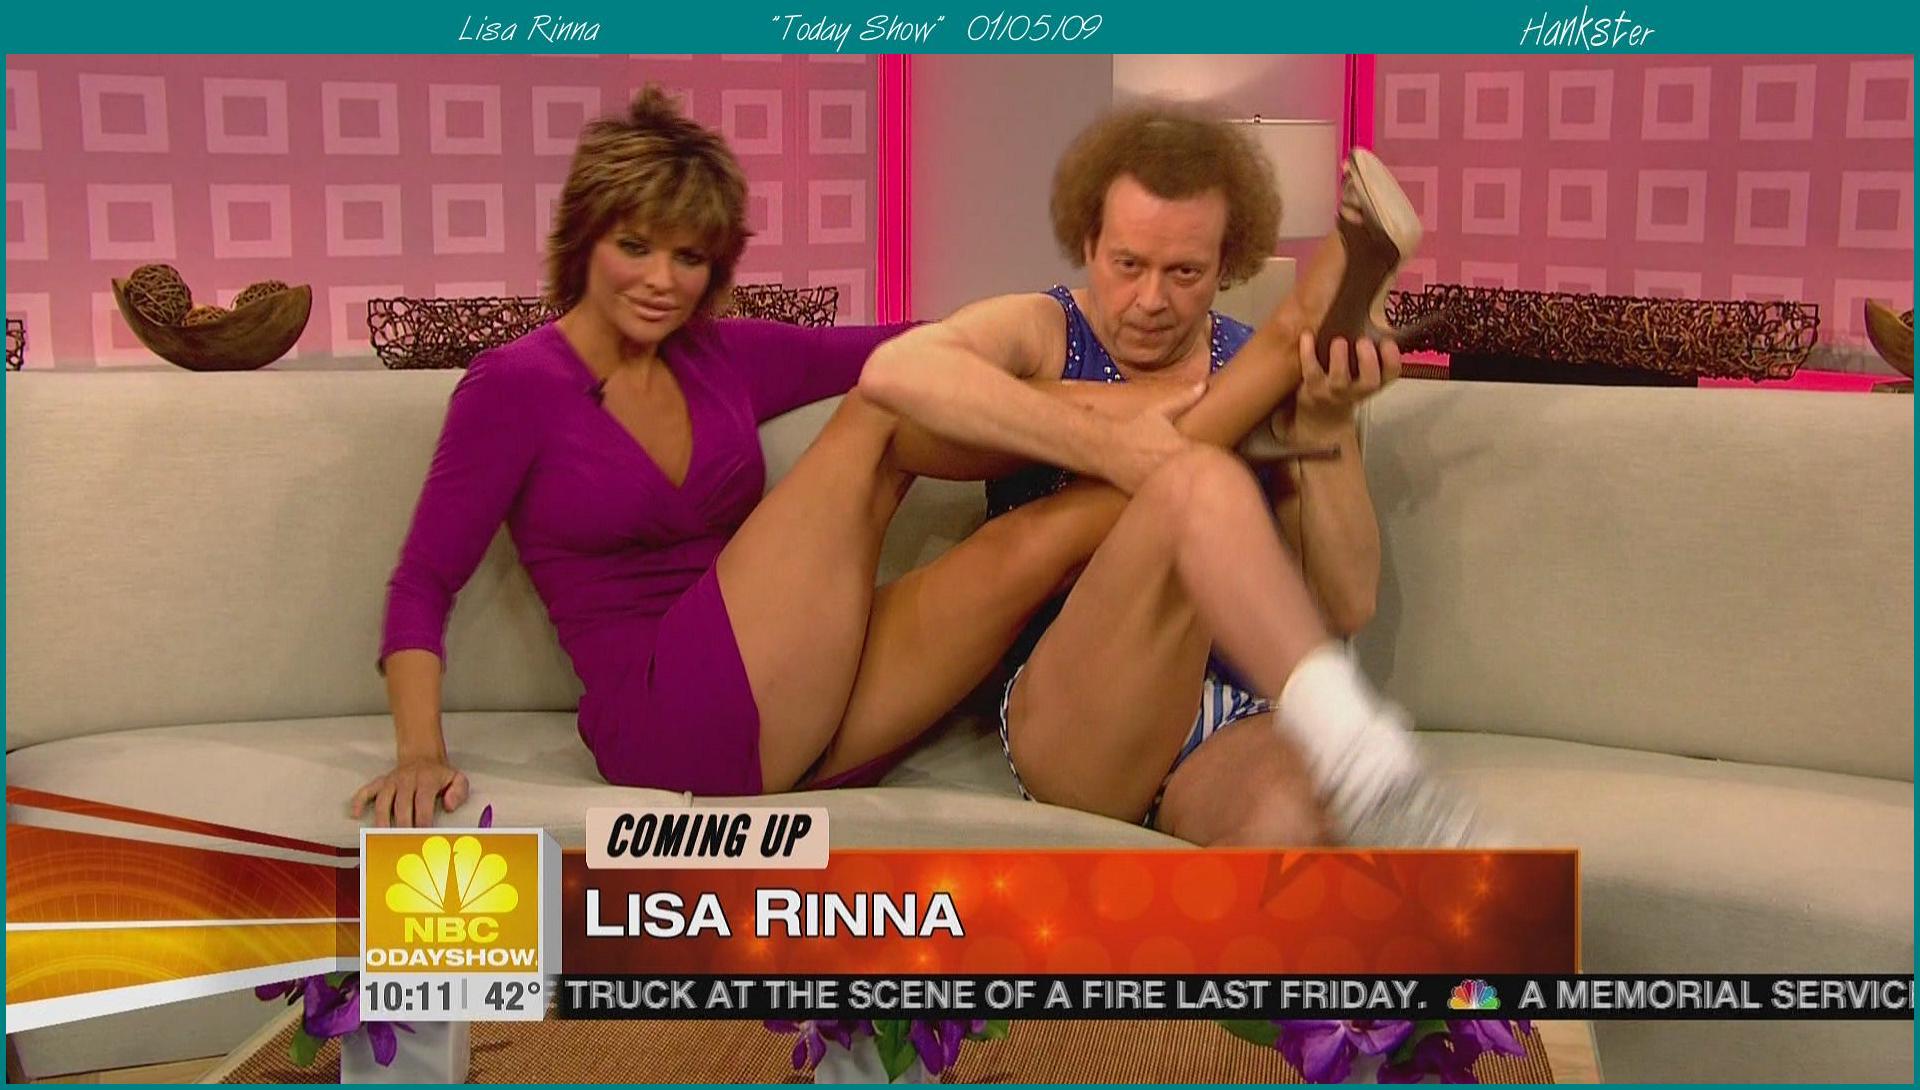 Lisa rinna naked